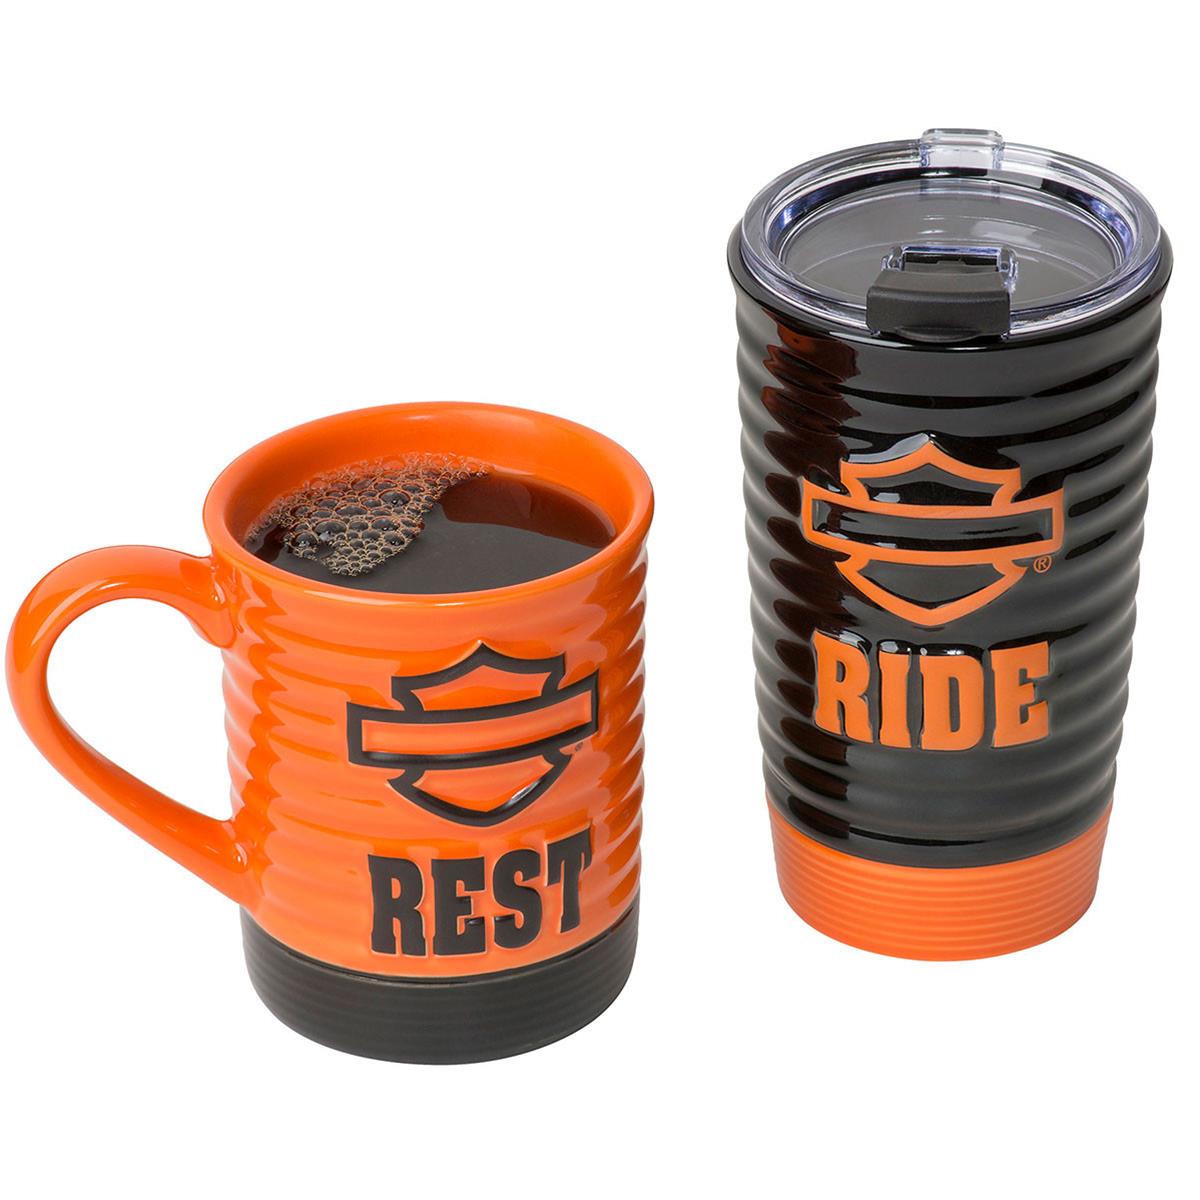 H-D Ride & Rest Travel/Coffee Mug Gift Set